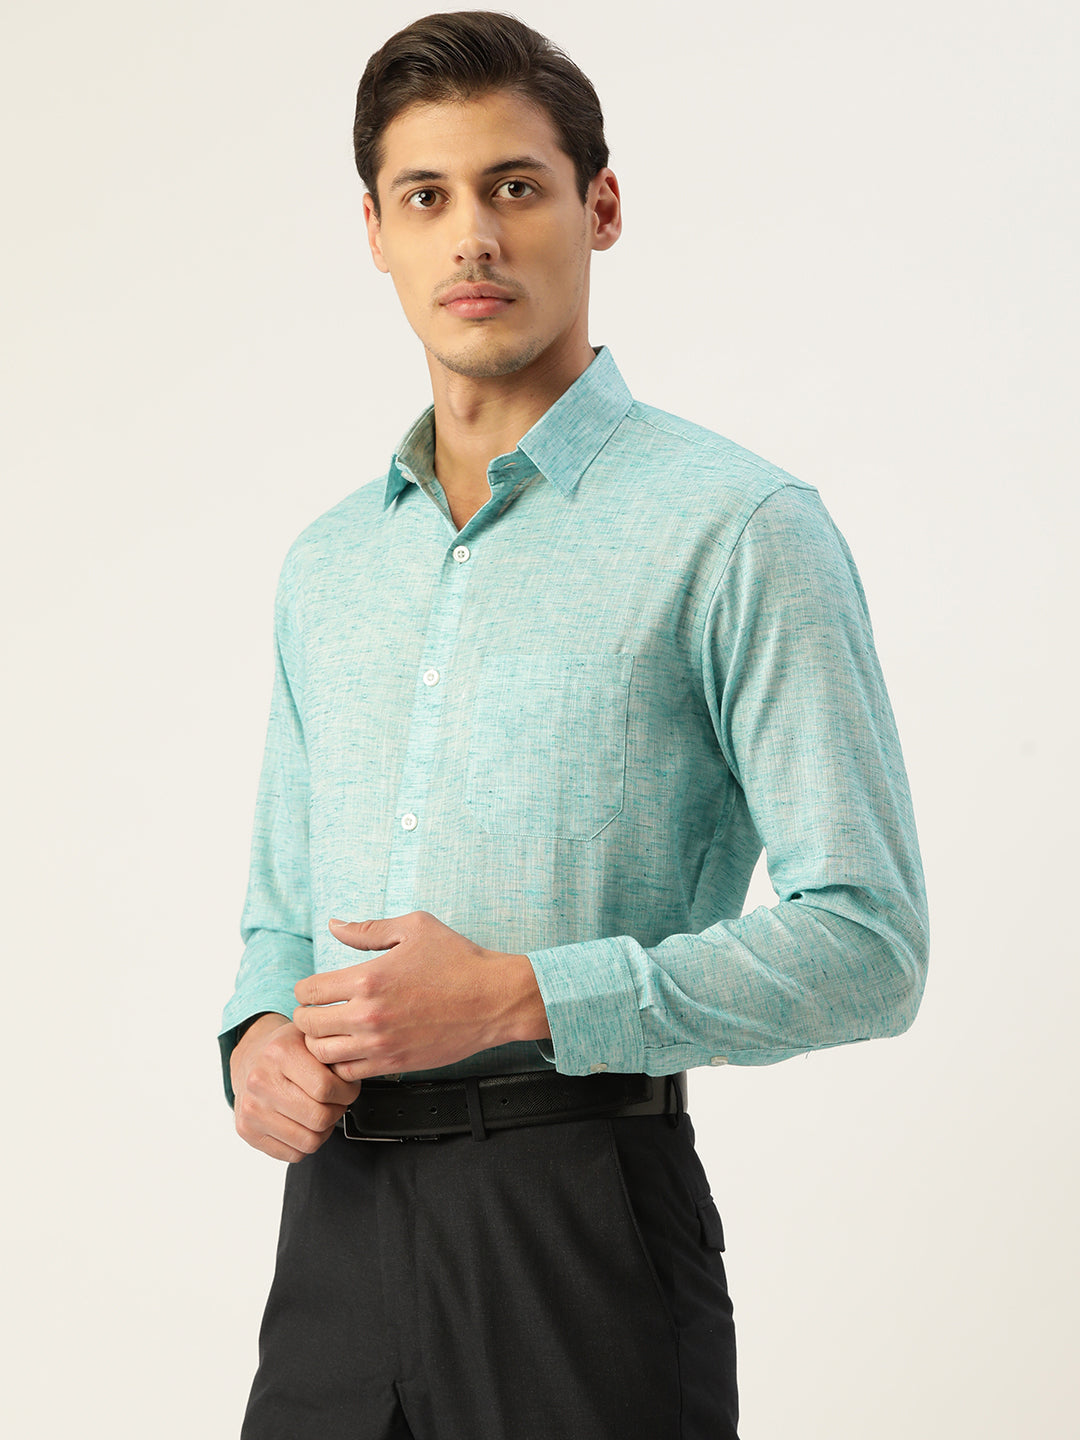 Men's Green Solid Cotton Formal Shirt ( SF 782Green ) - Jainish